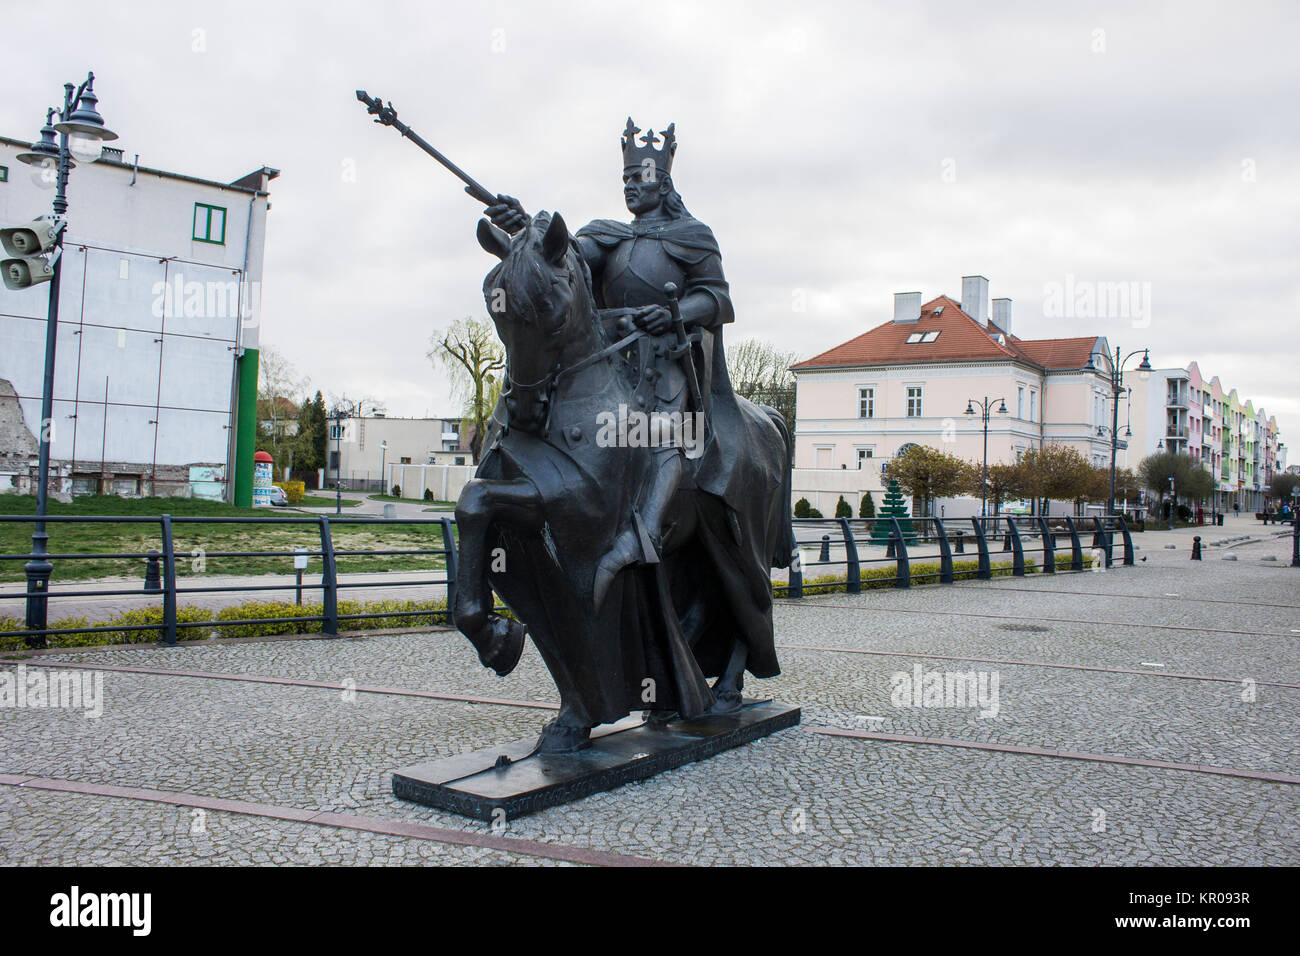 Equestrian statue of Casimir IV Jagiellon (Kazimierz IV Jagiellonczyk), Grand Duke of Lithuania and King of Poland. Malbork, Poland Stock Photo